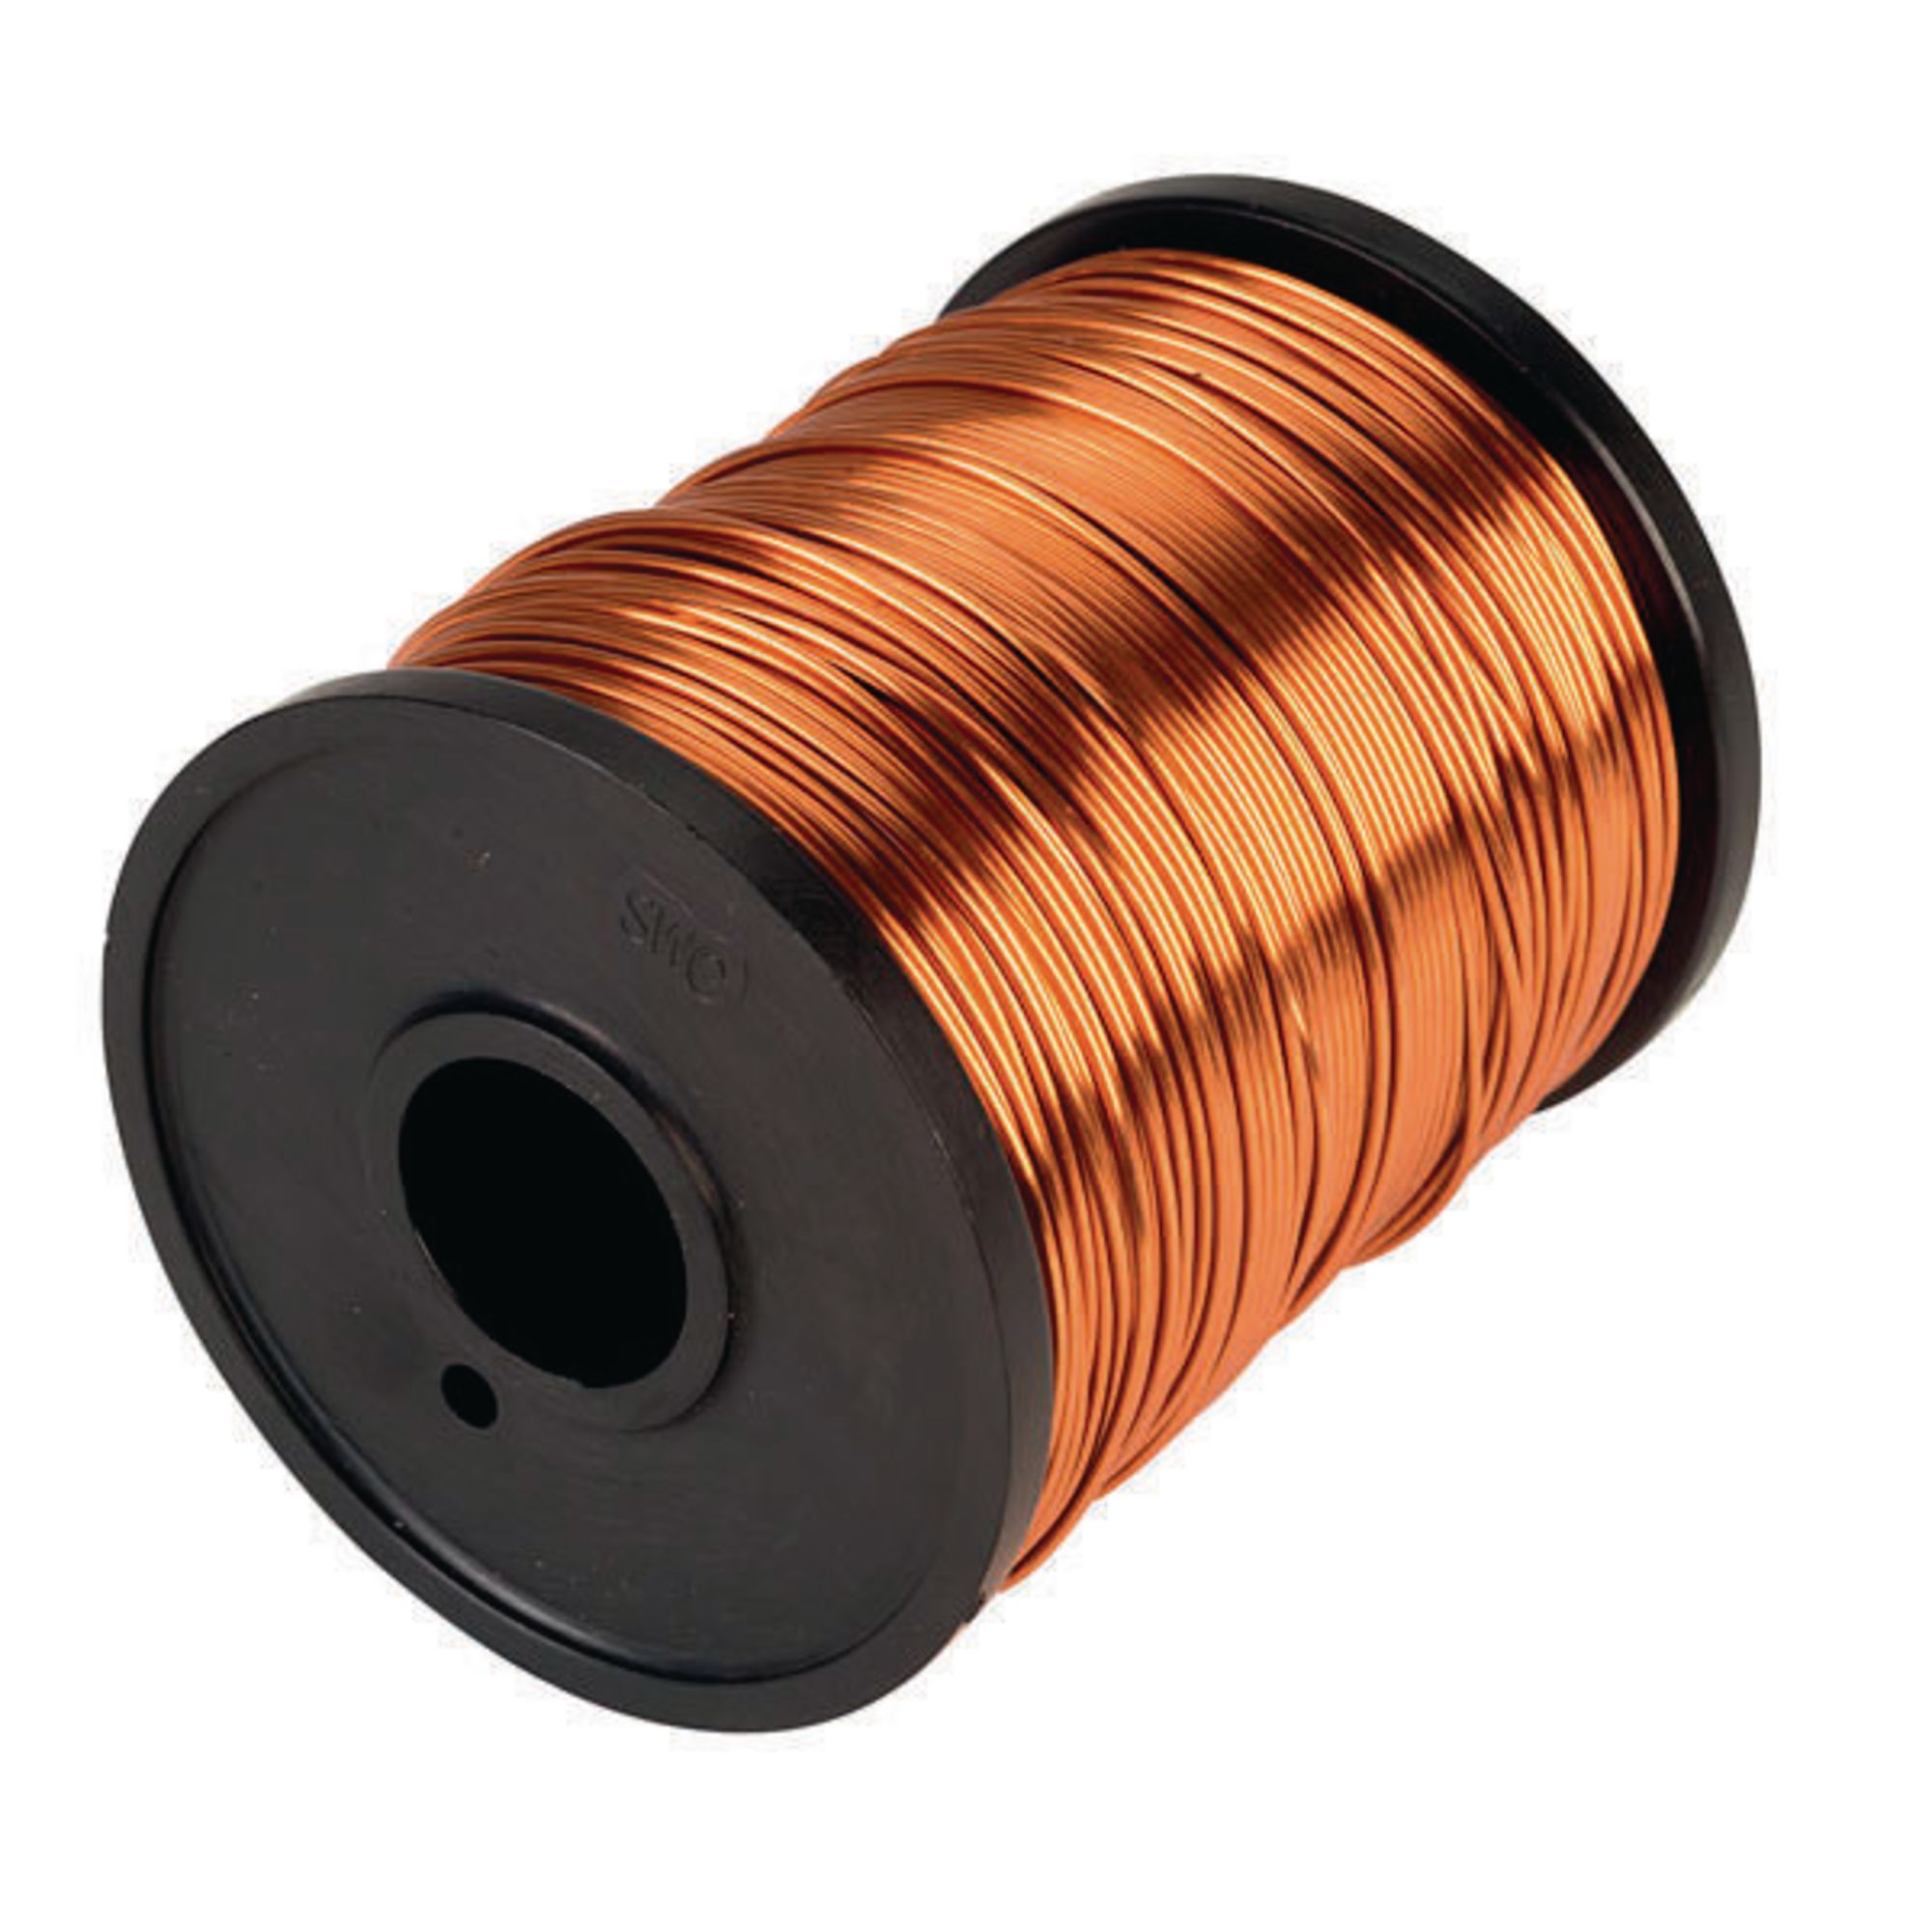 CP00054522 - Nichrome Wire - 125g reel, 32 SWG, Diameter 0.27mm